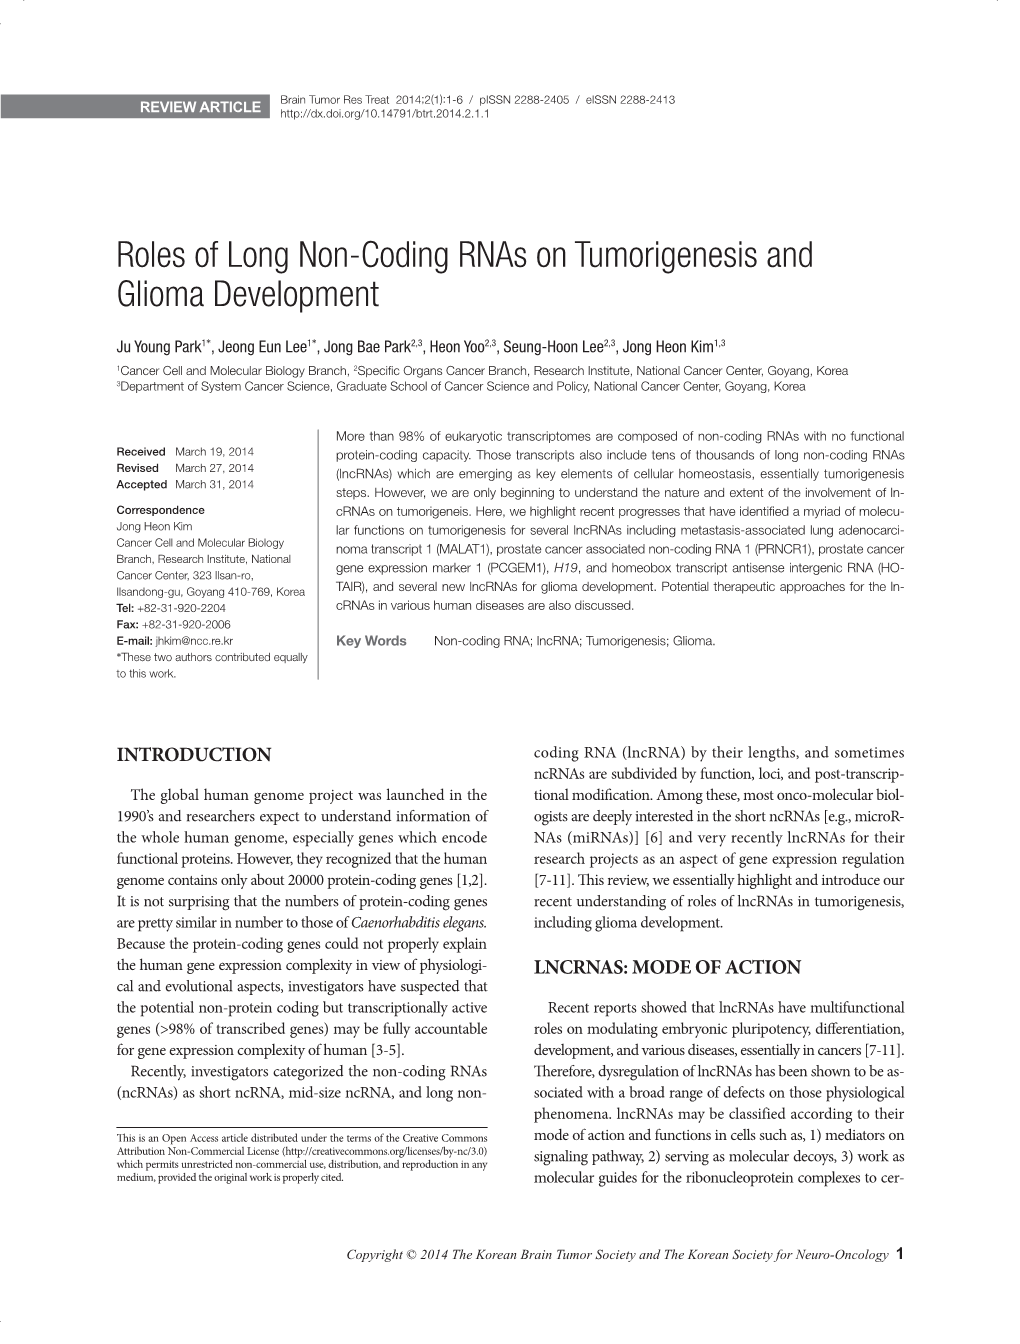 Roles of Long Non-Coding Rnas on Tumorigenesis and Glioma Development